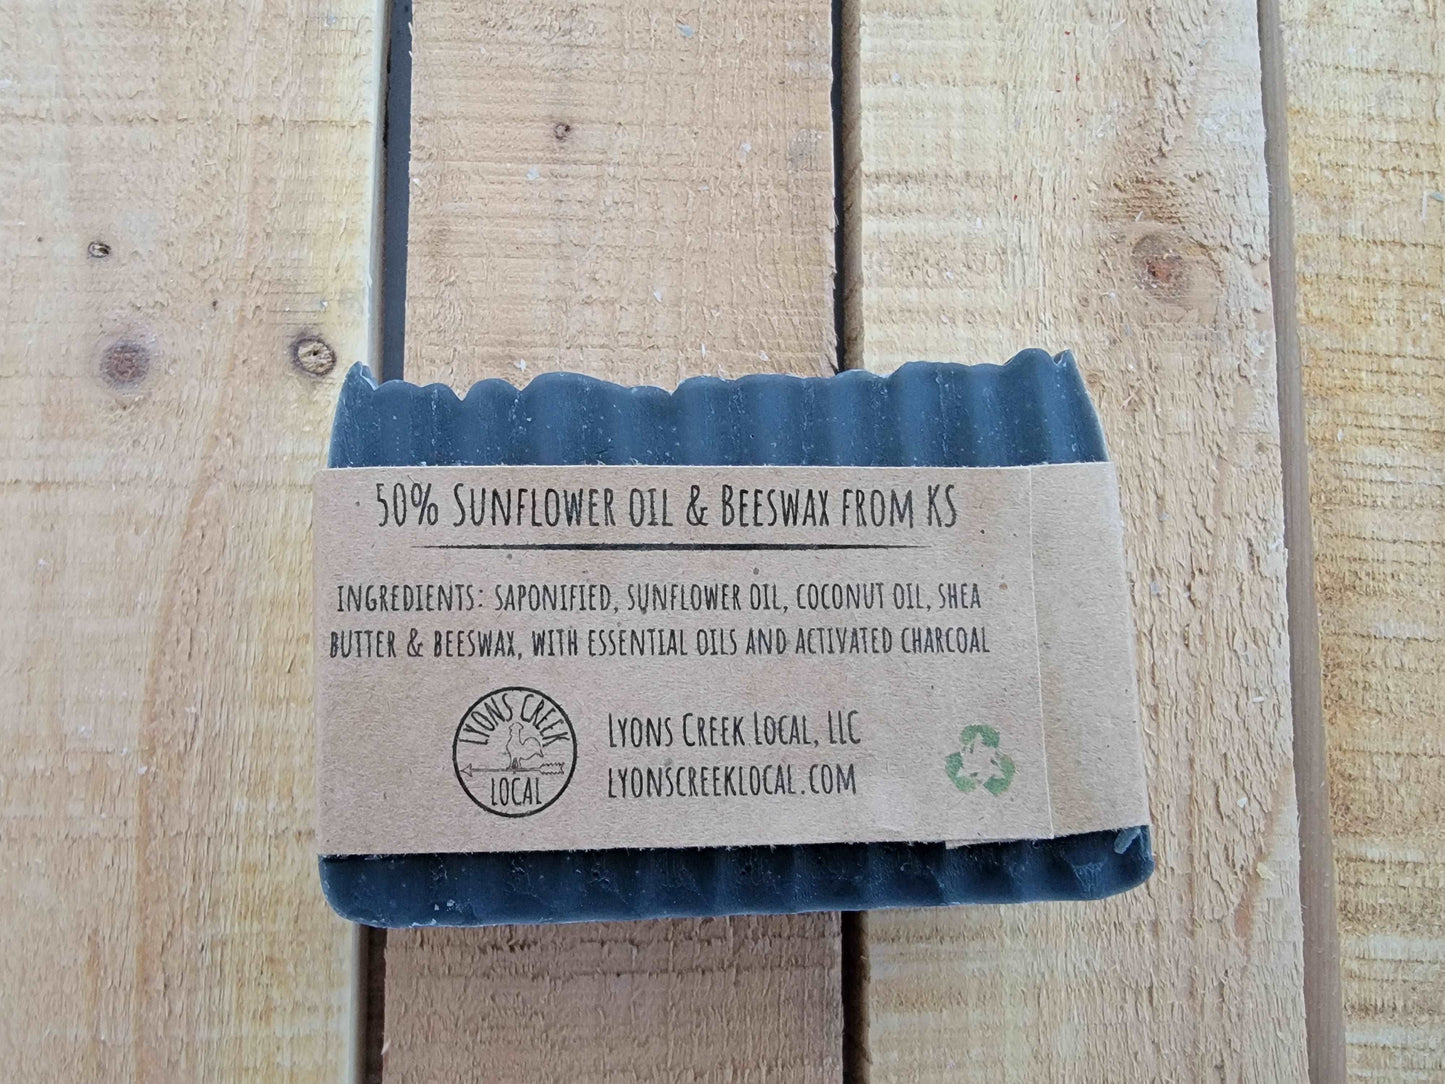 Cedar Soap | Handmade and Natural | Sunflower Soaps